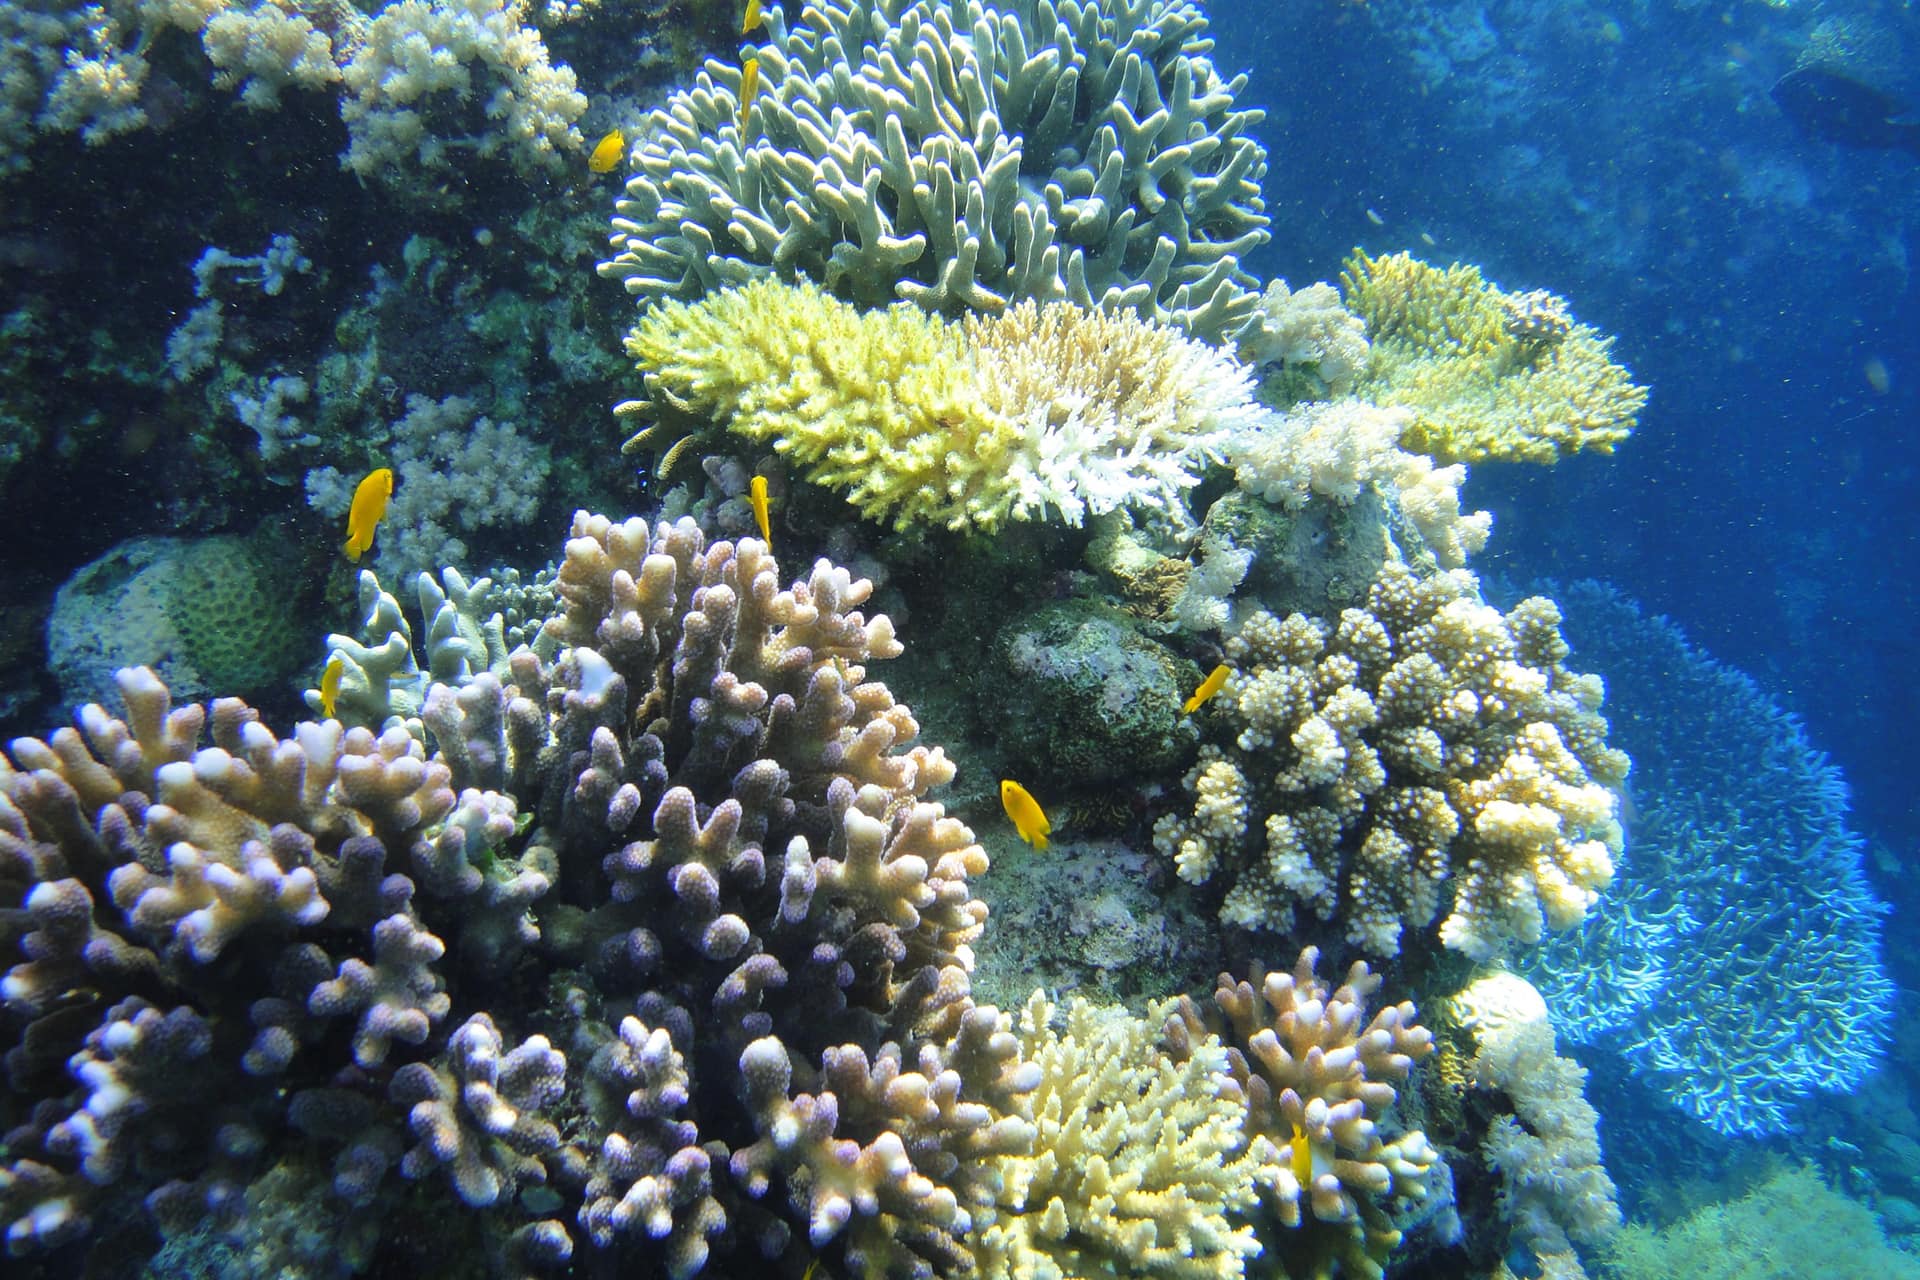 koraly v mori